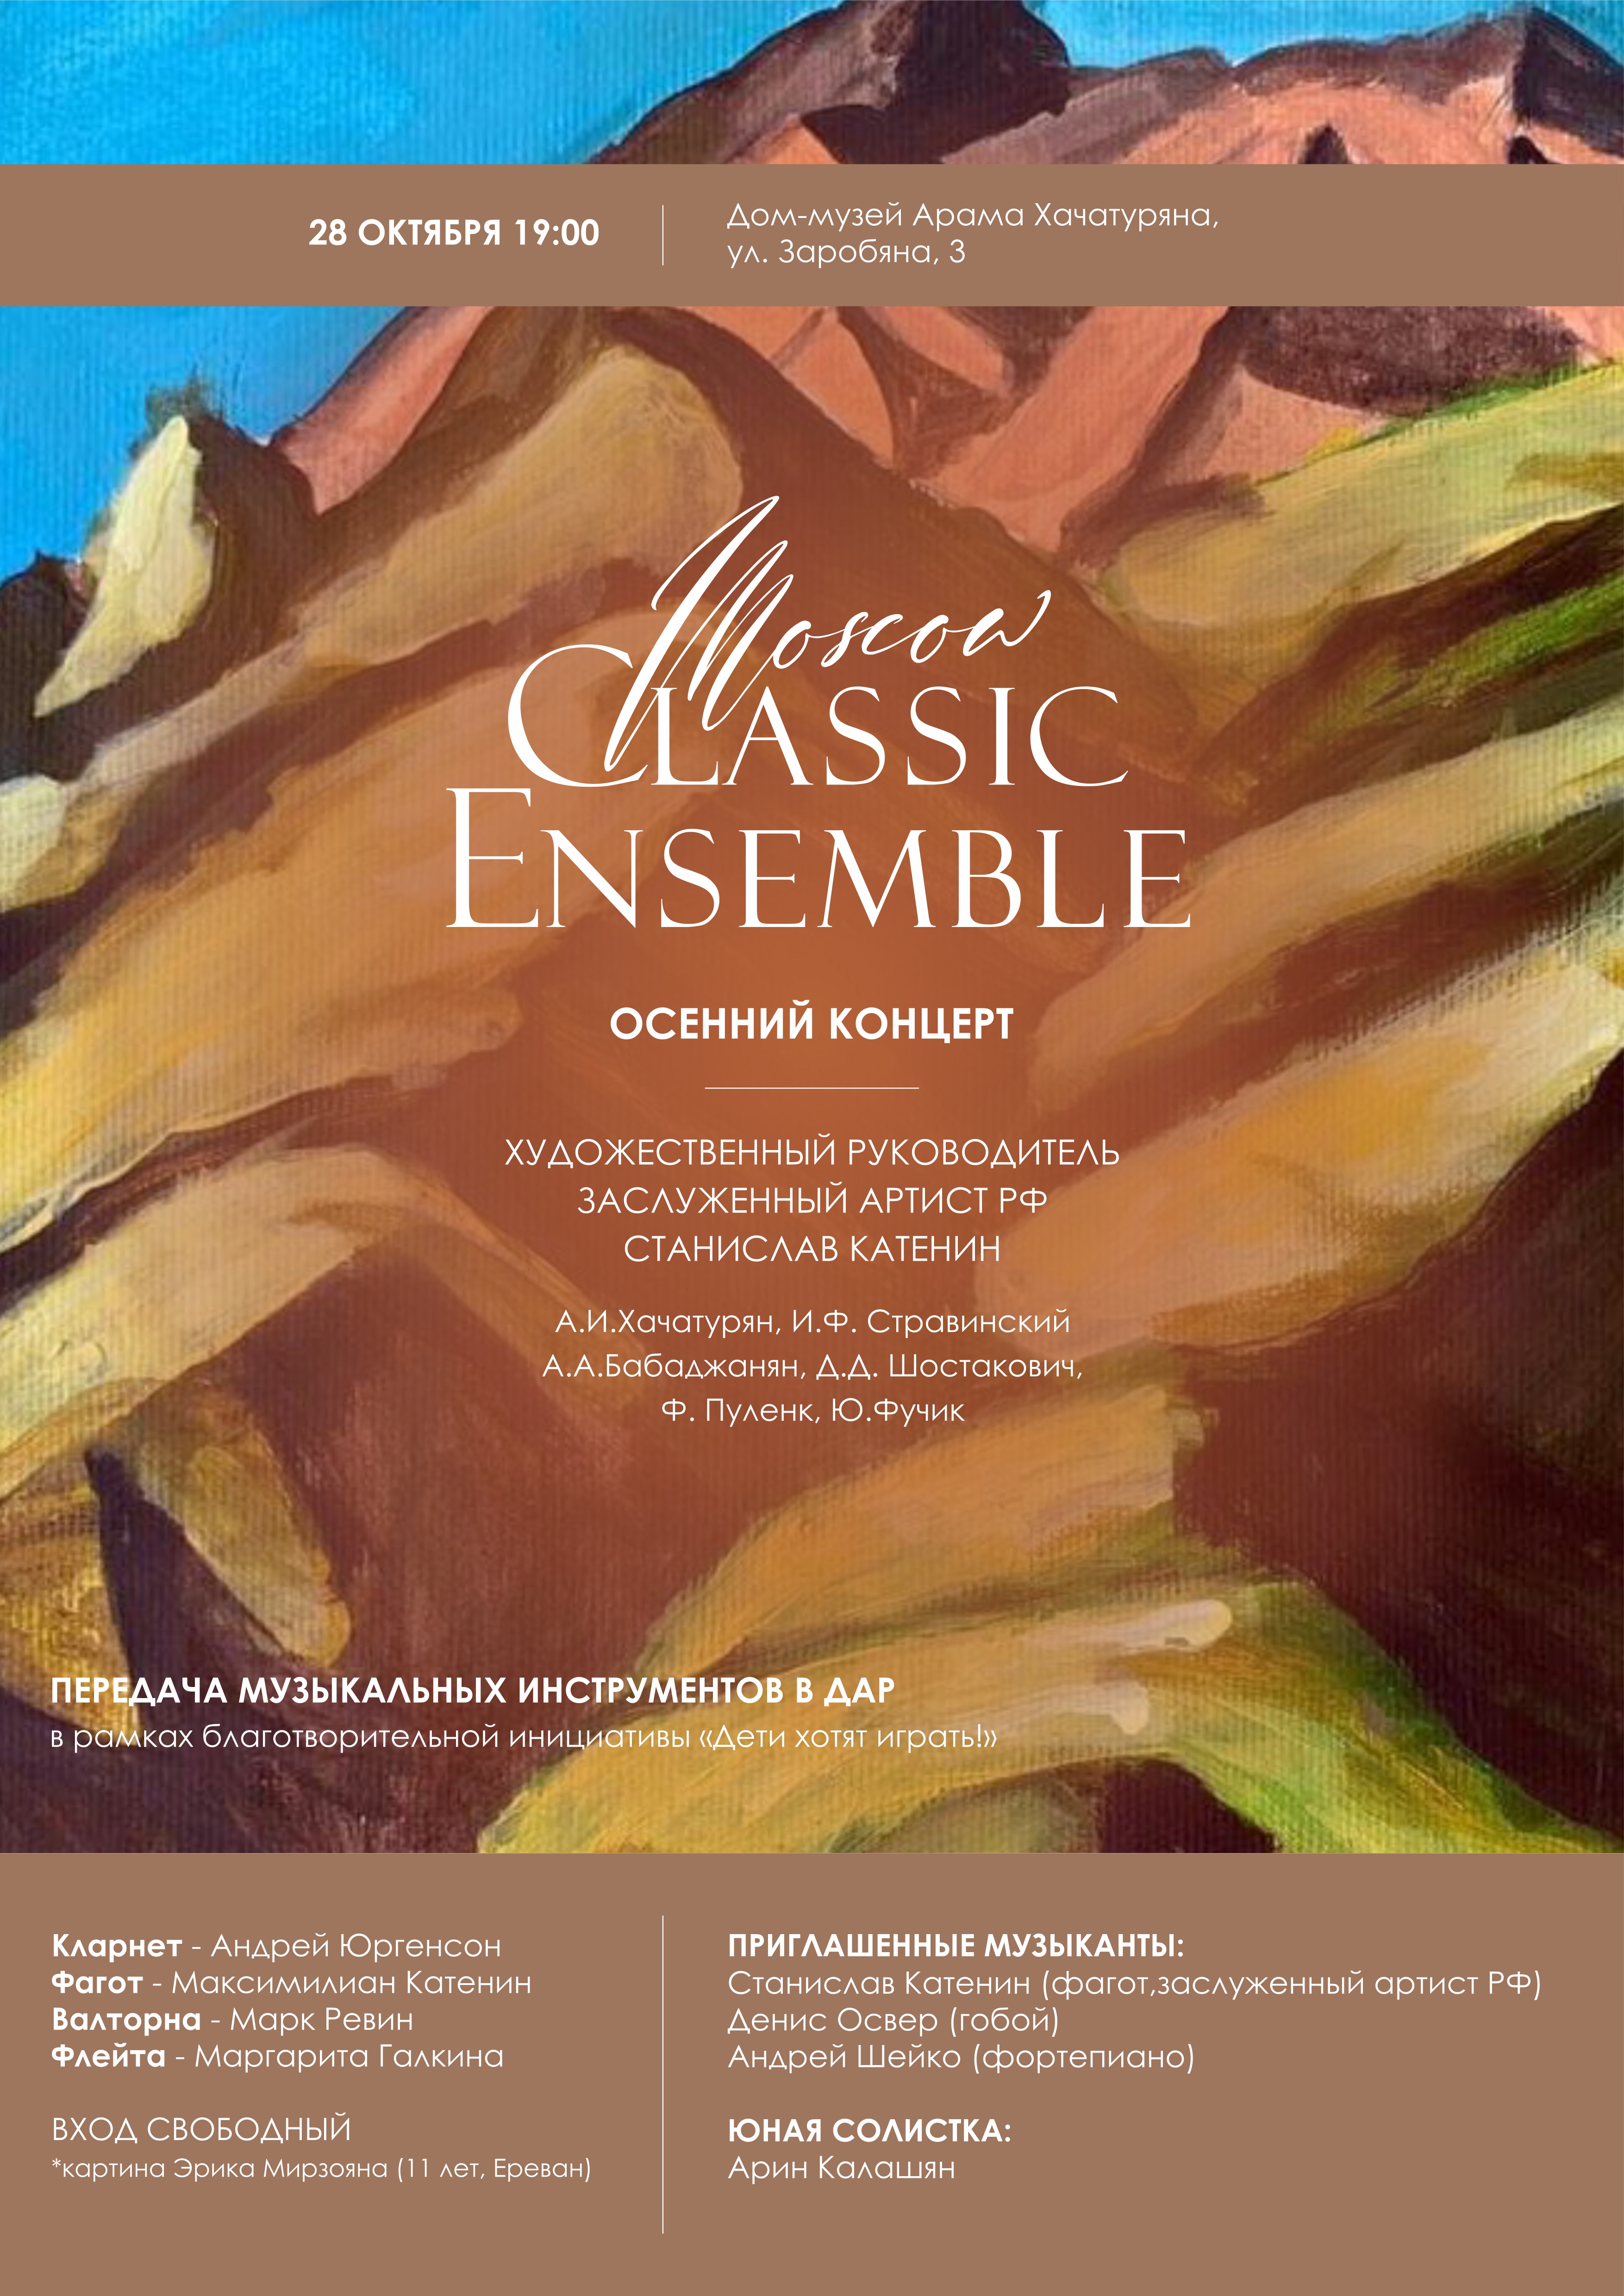 Moscow Classic Ensemble даст концерт и вручит в дар музыкальные инструменты школам Арцаха